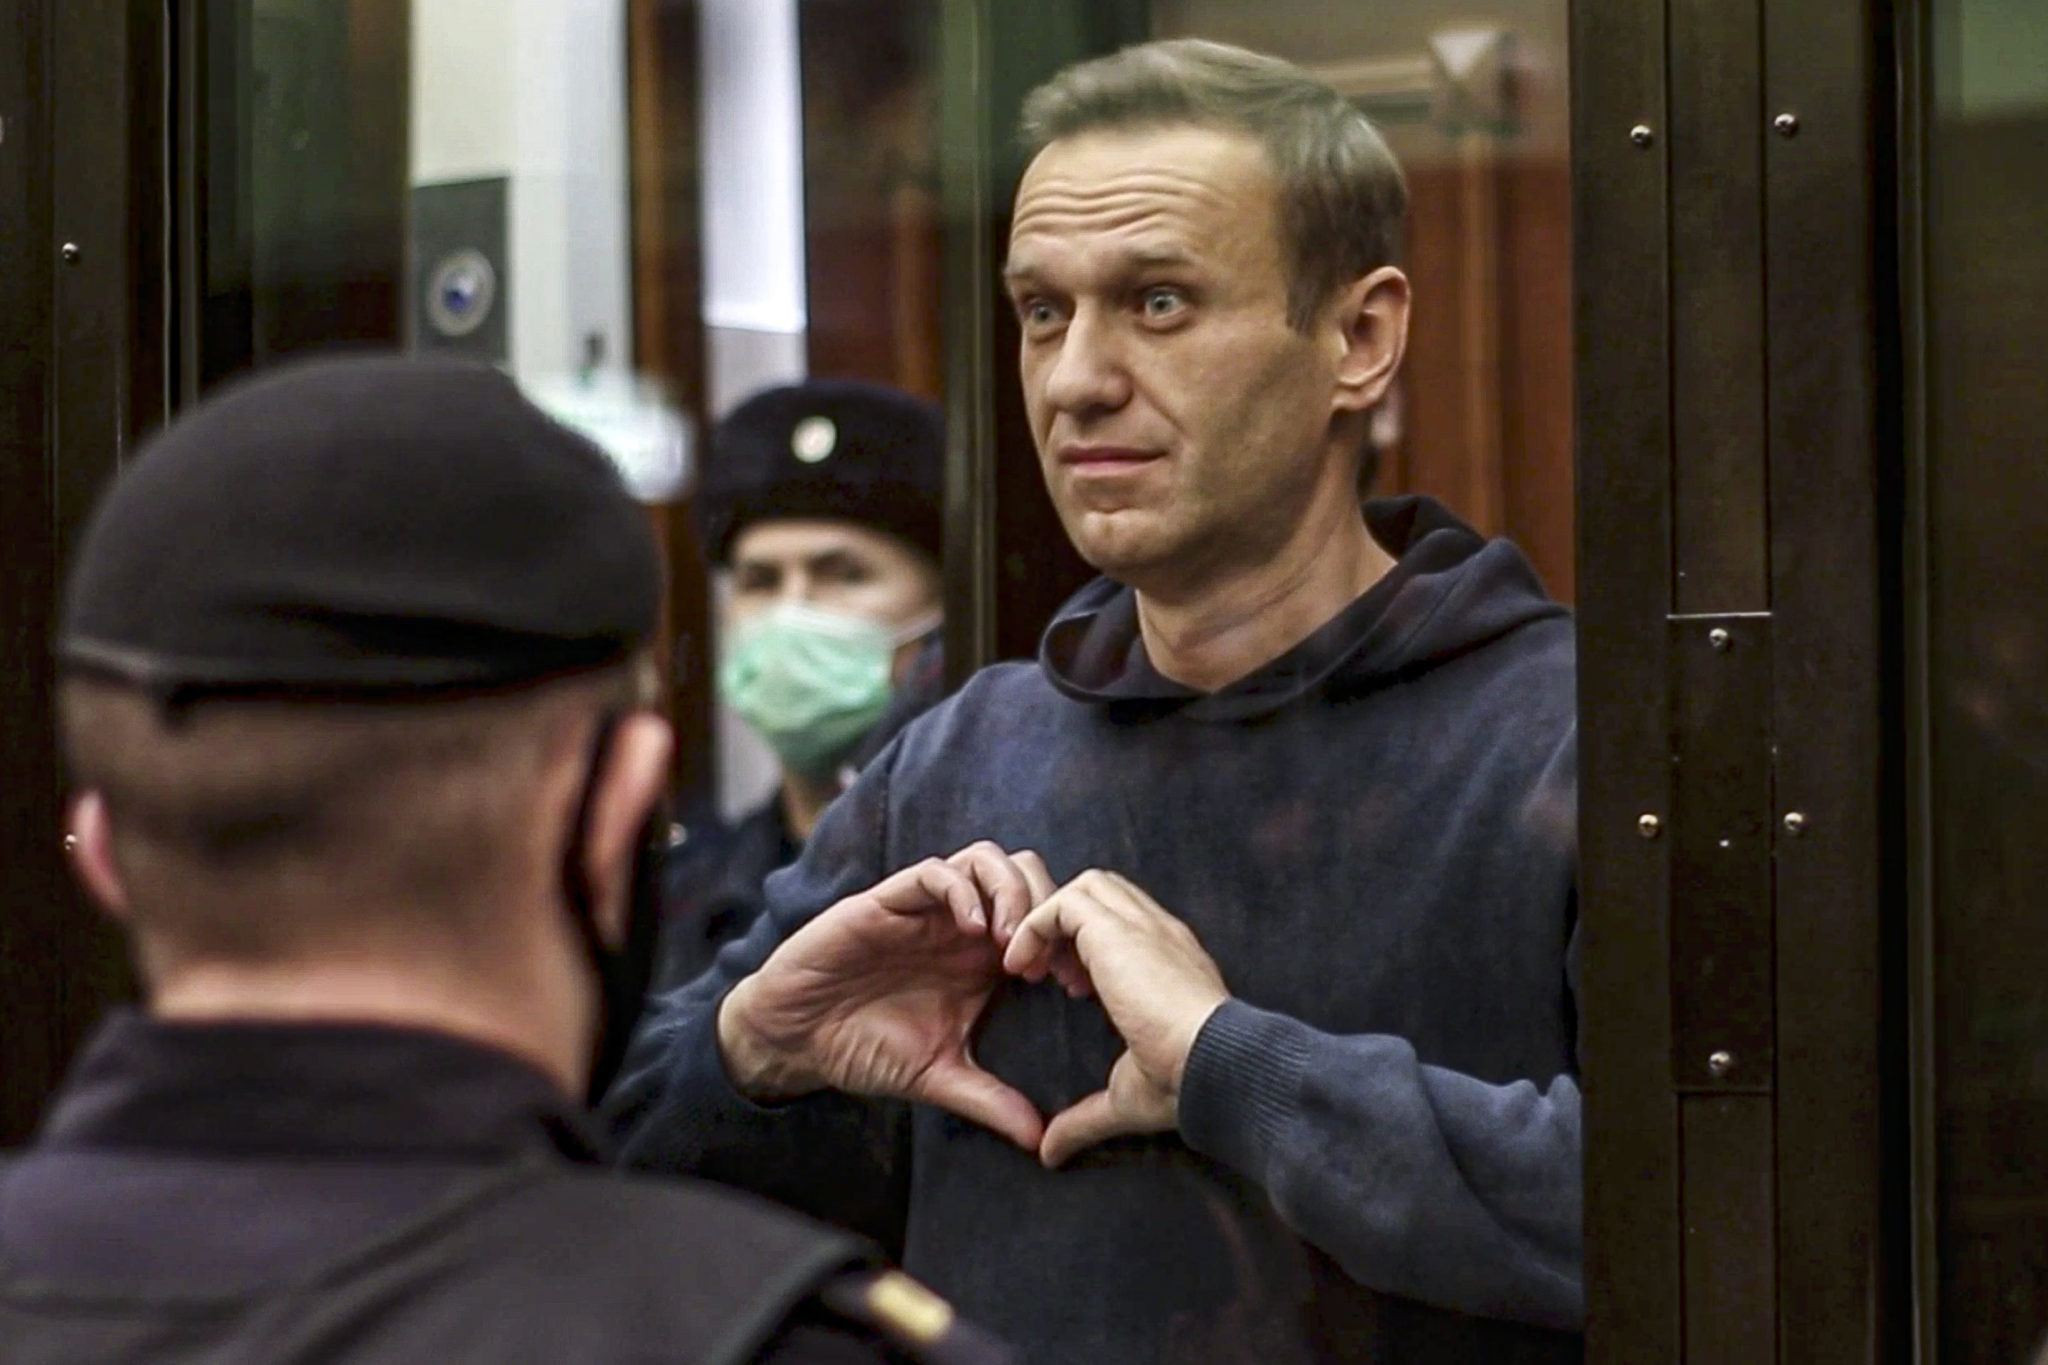 Mr Navalny